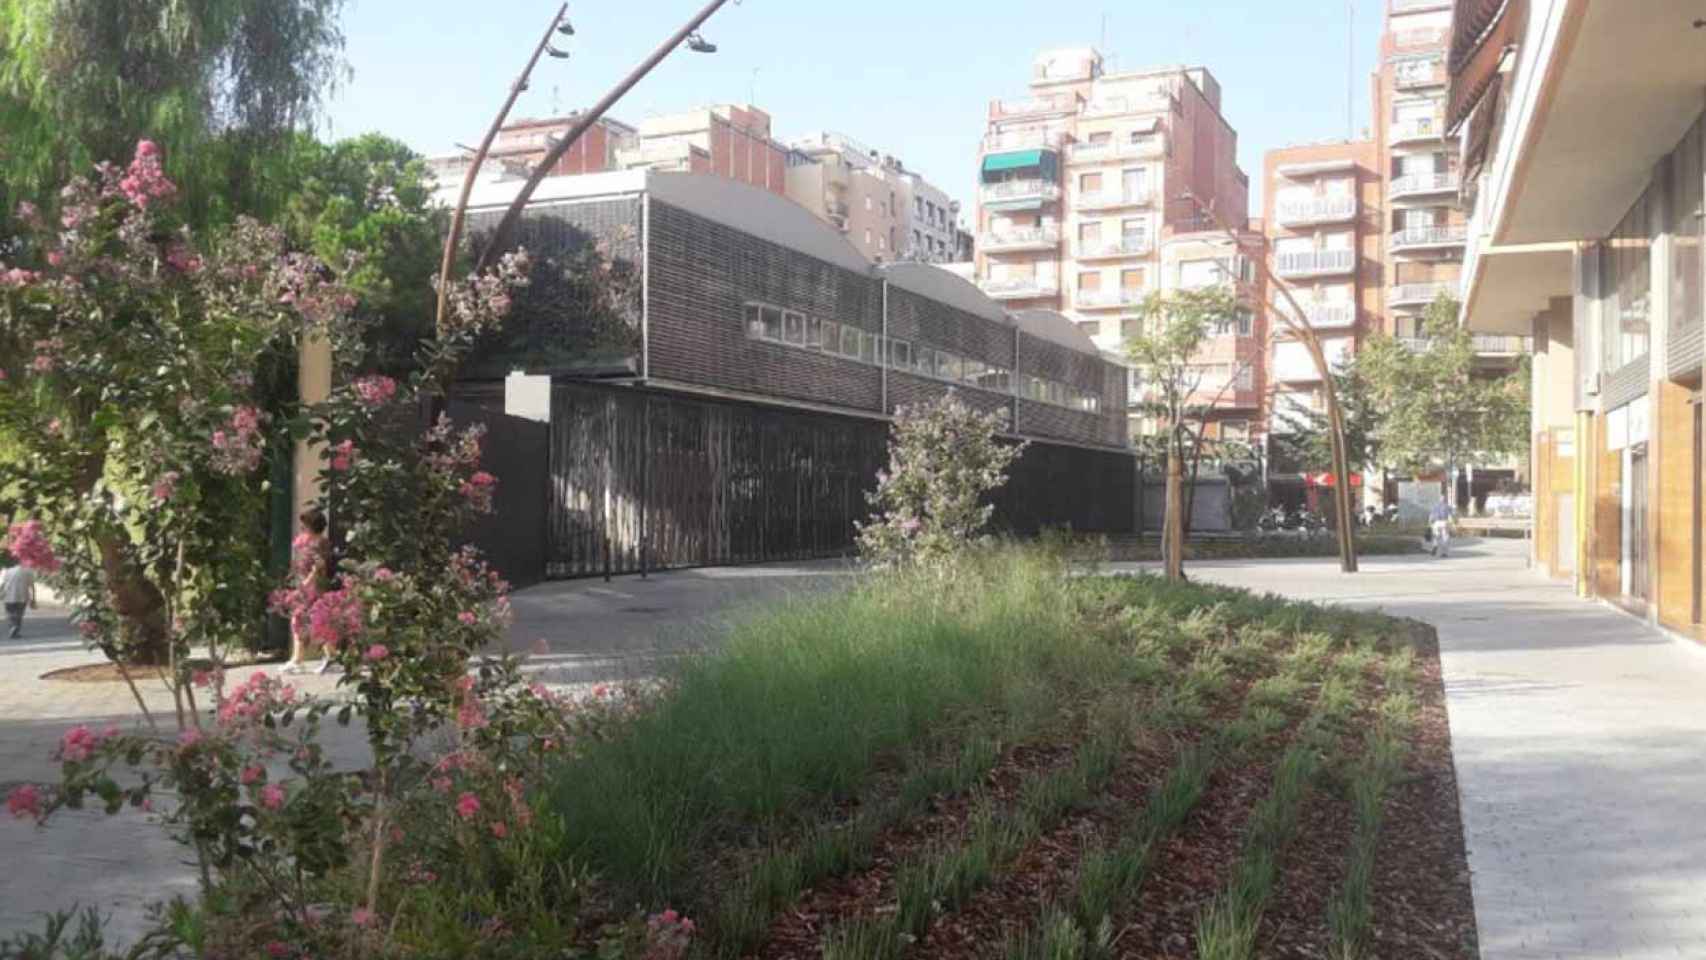 Nueva imagen de la calle Conxita Supervia / Ajuntament Barcelona